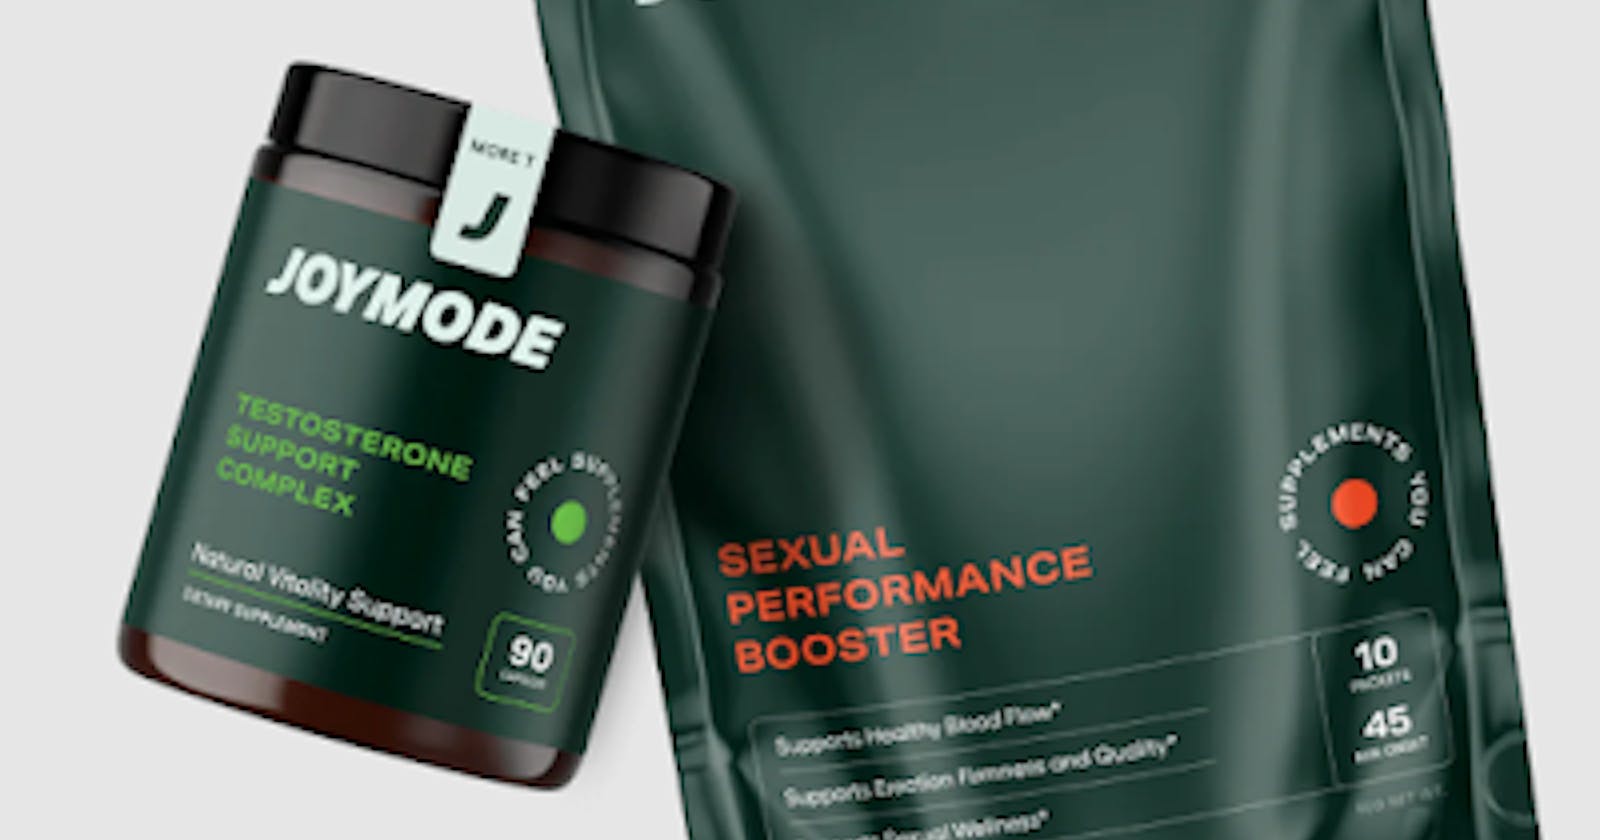 Joy Mode Male Booster - #1 Testosterone Booster Formula